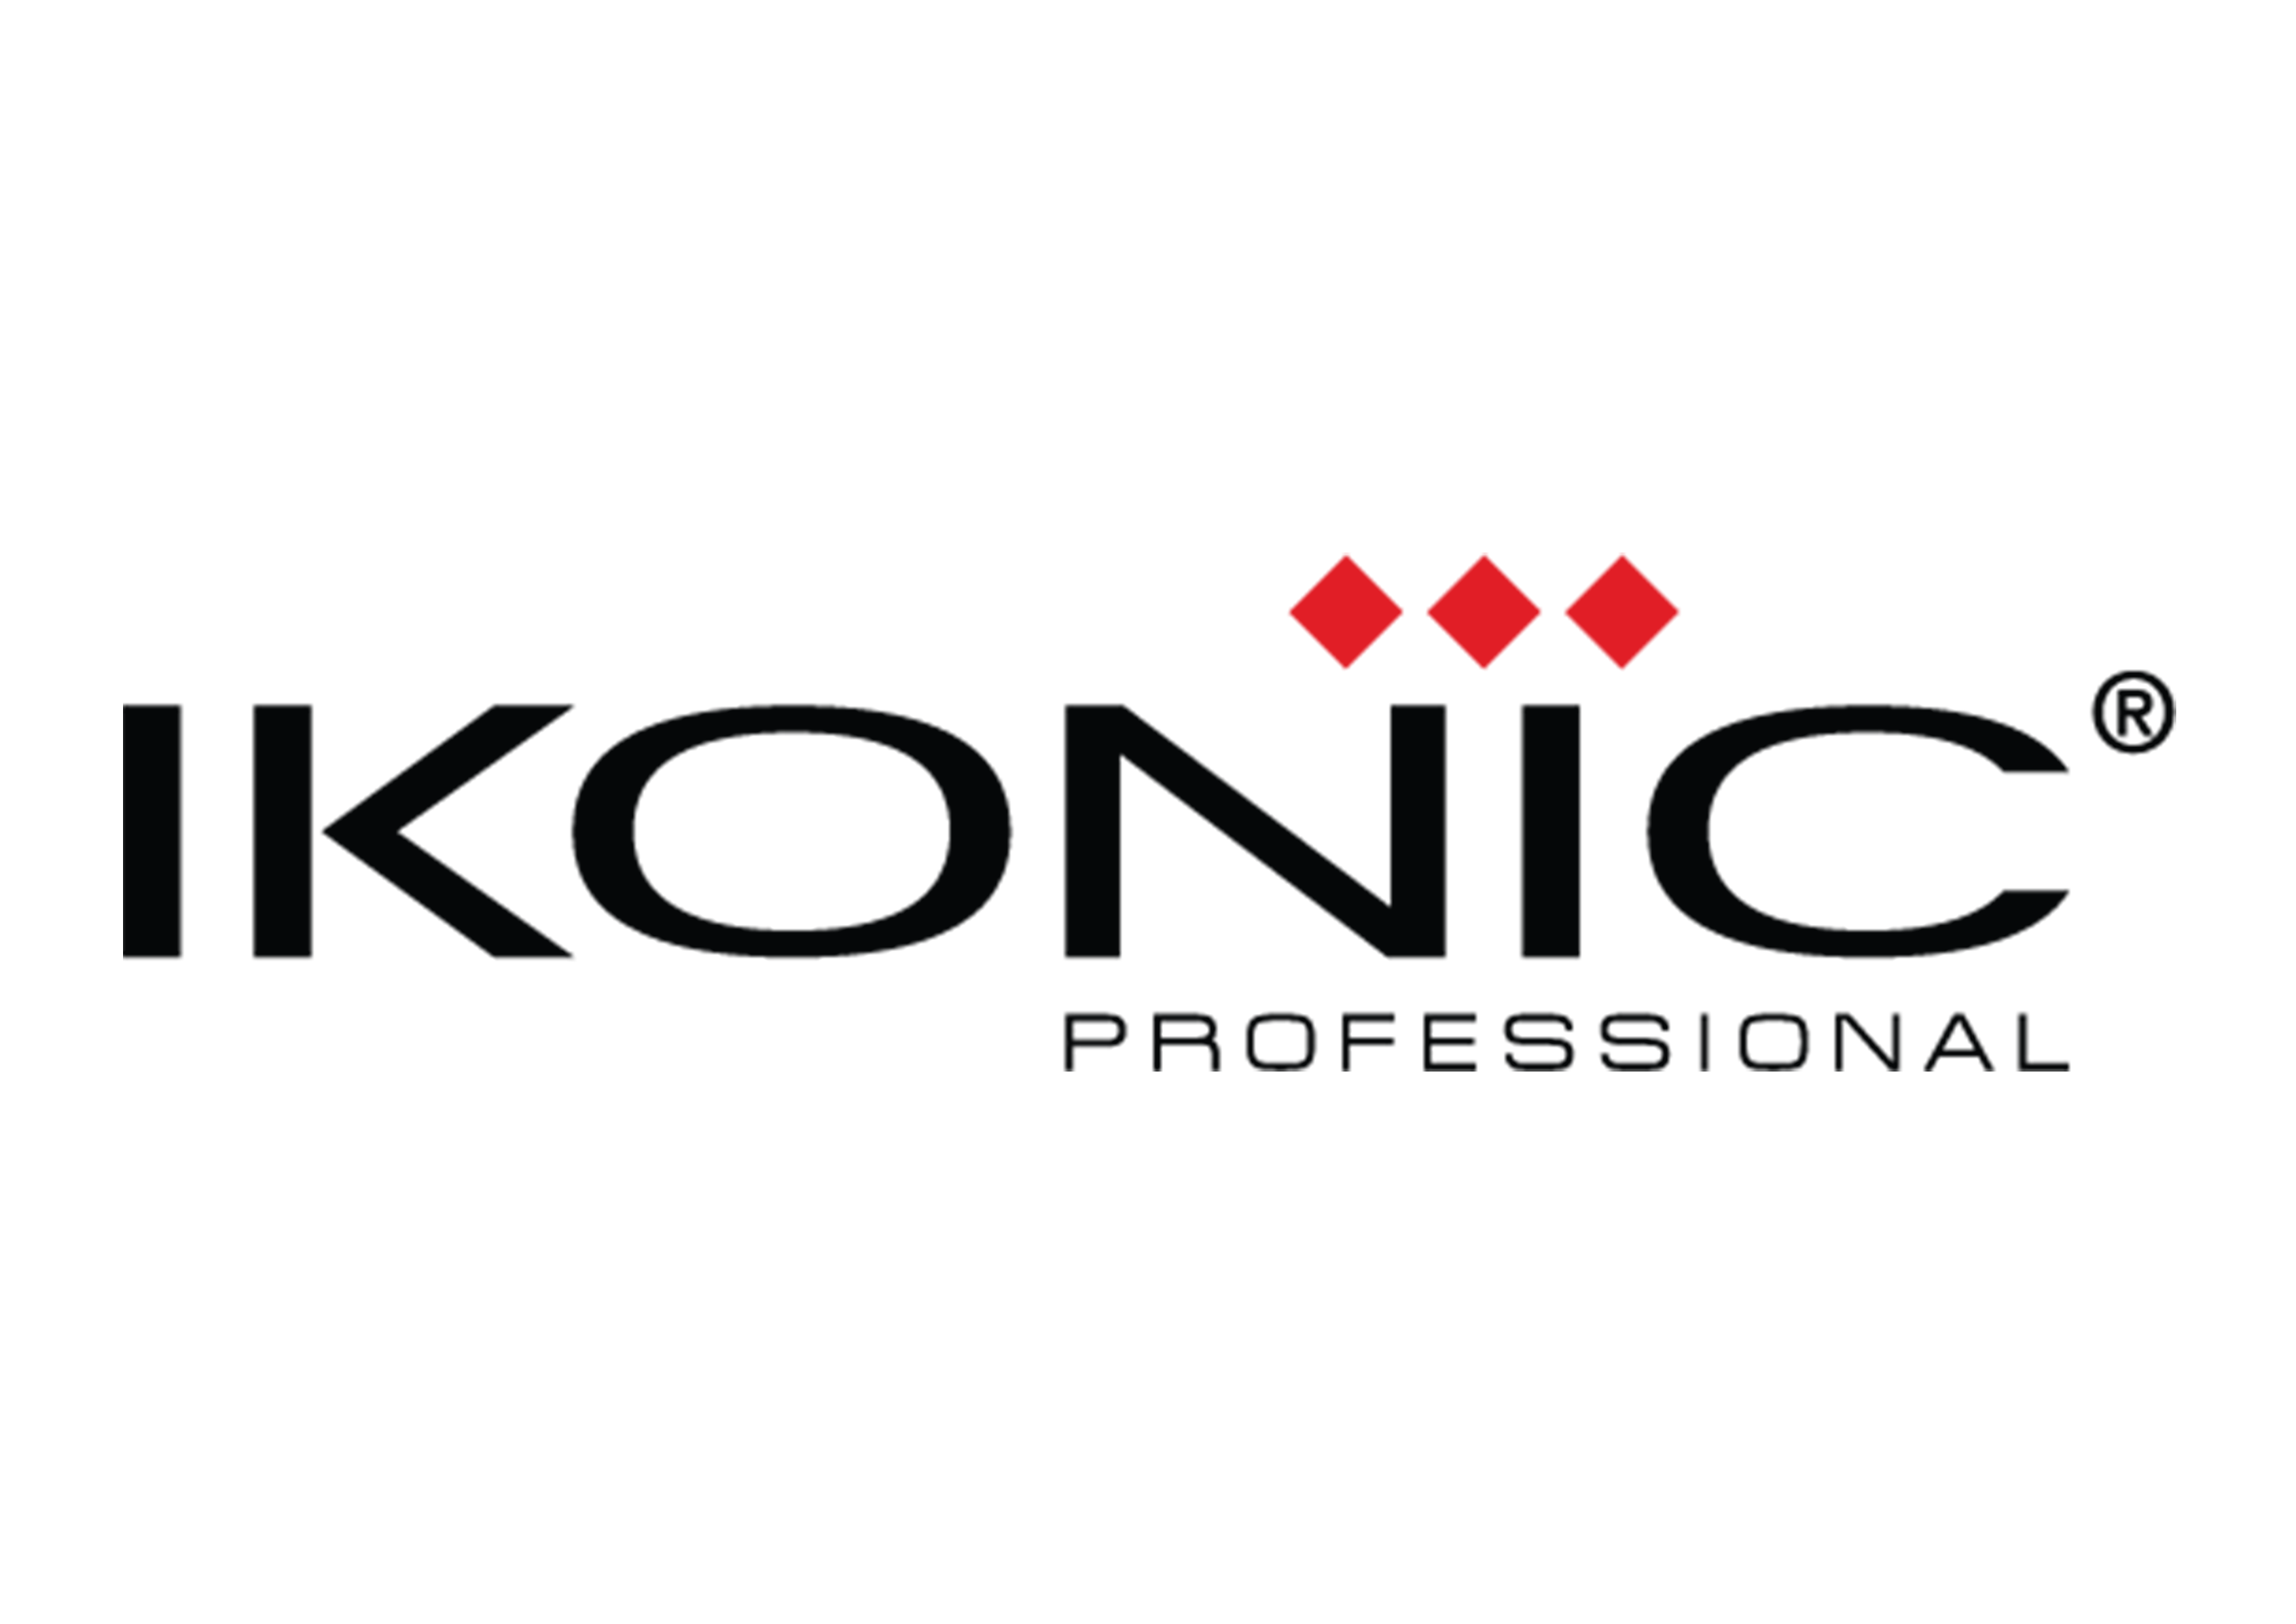 VC Academy - Logo Ikonic